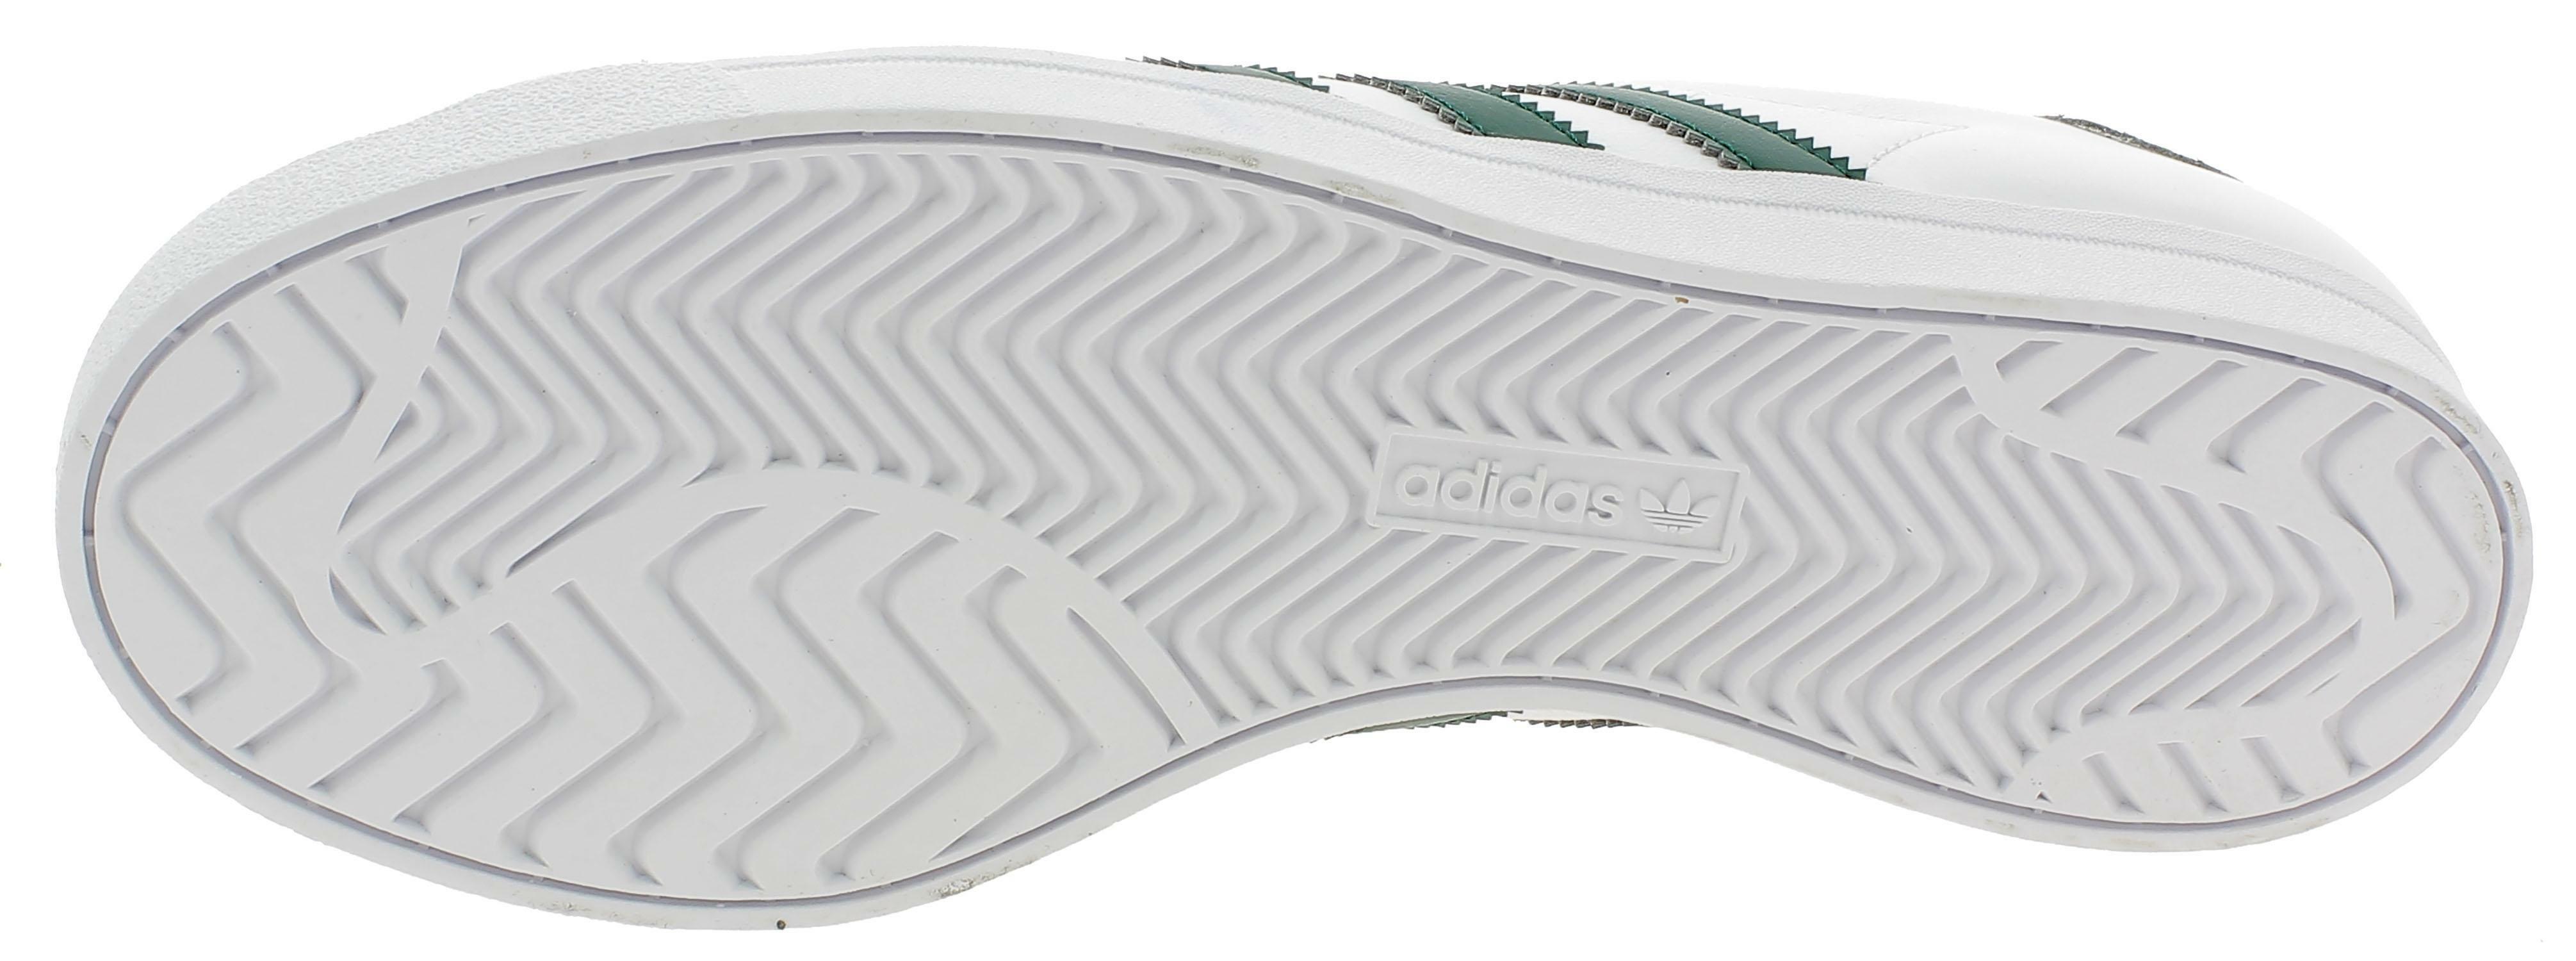 adidas adidas coast star scarpe sportive uomo bianche ee9949